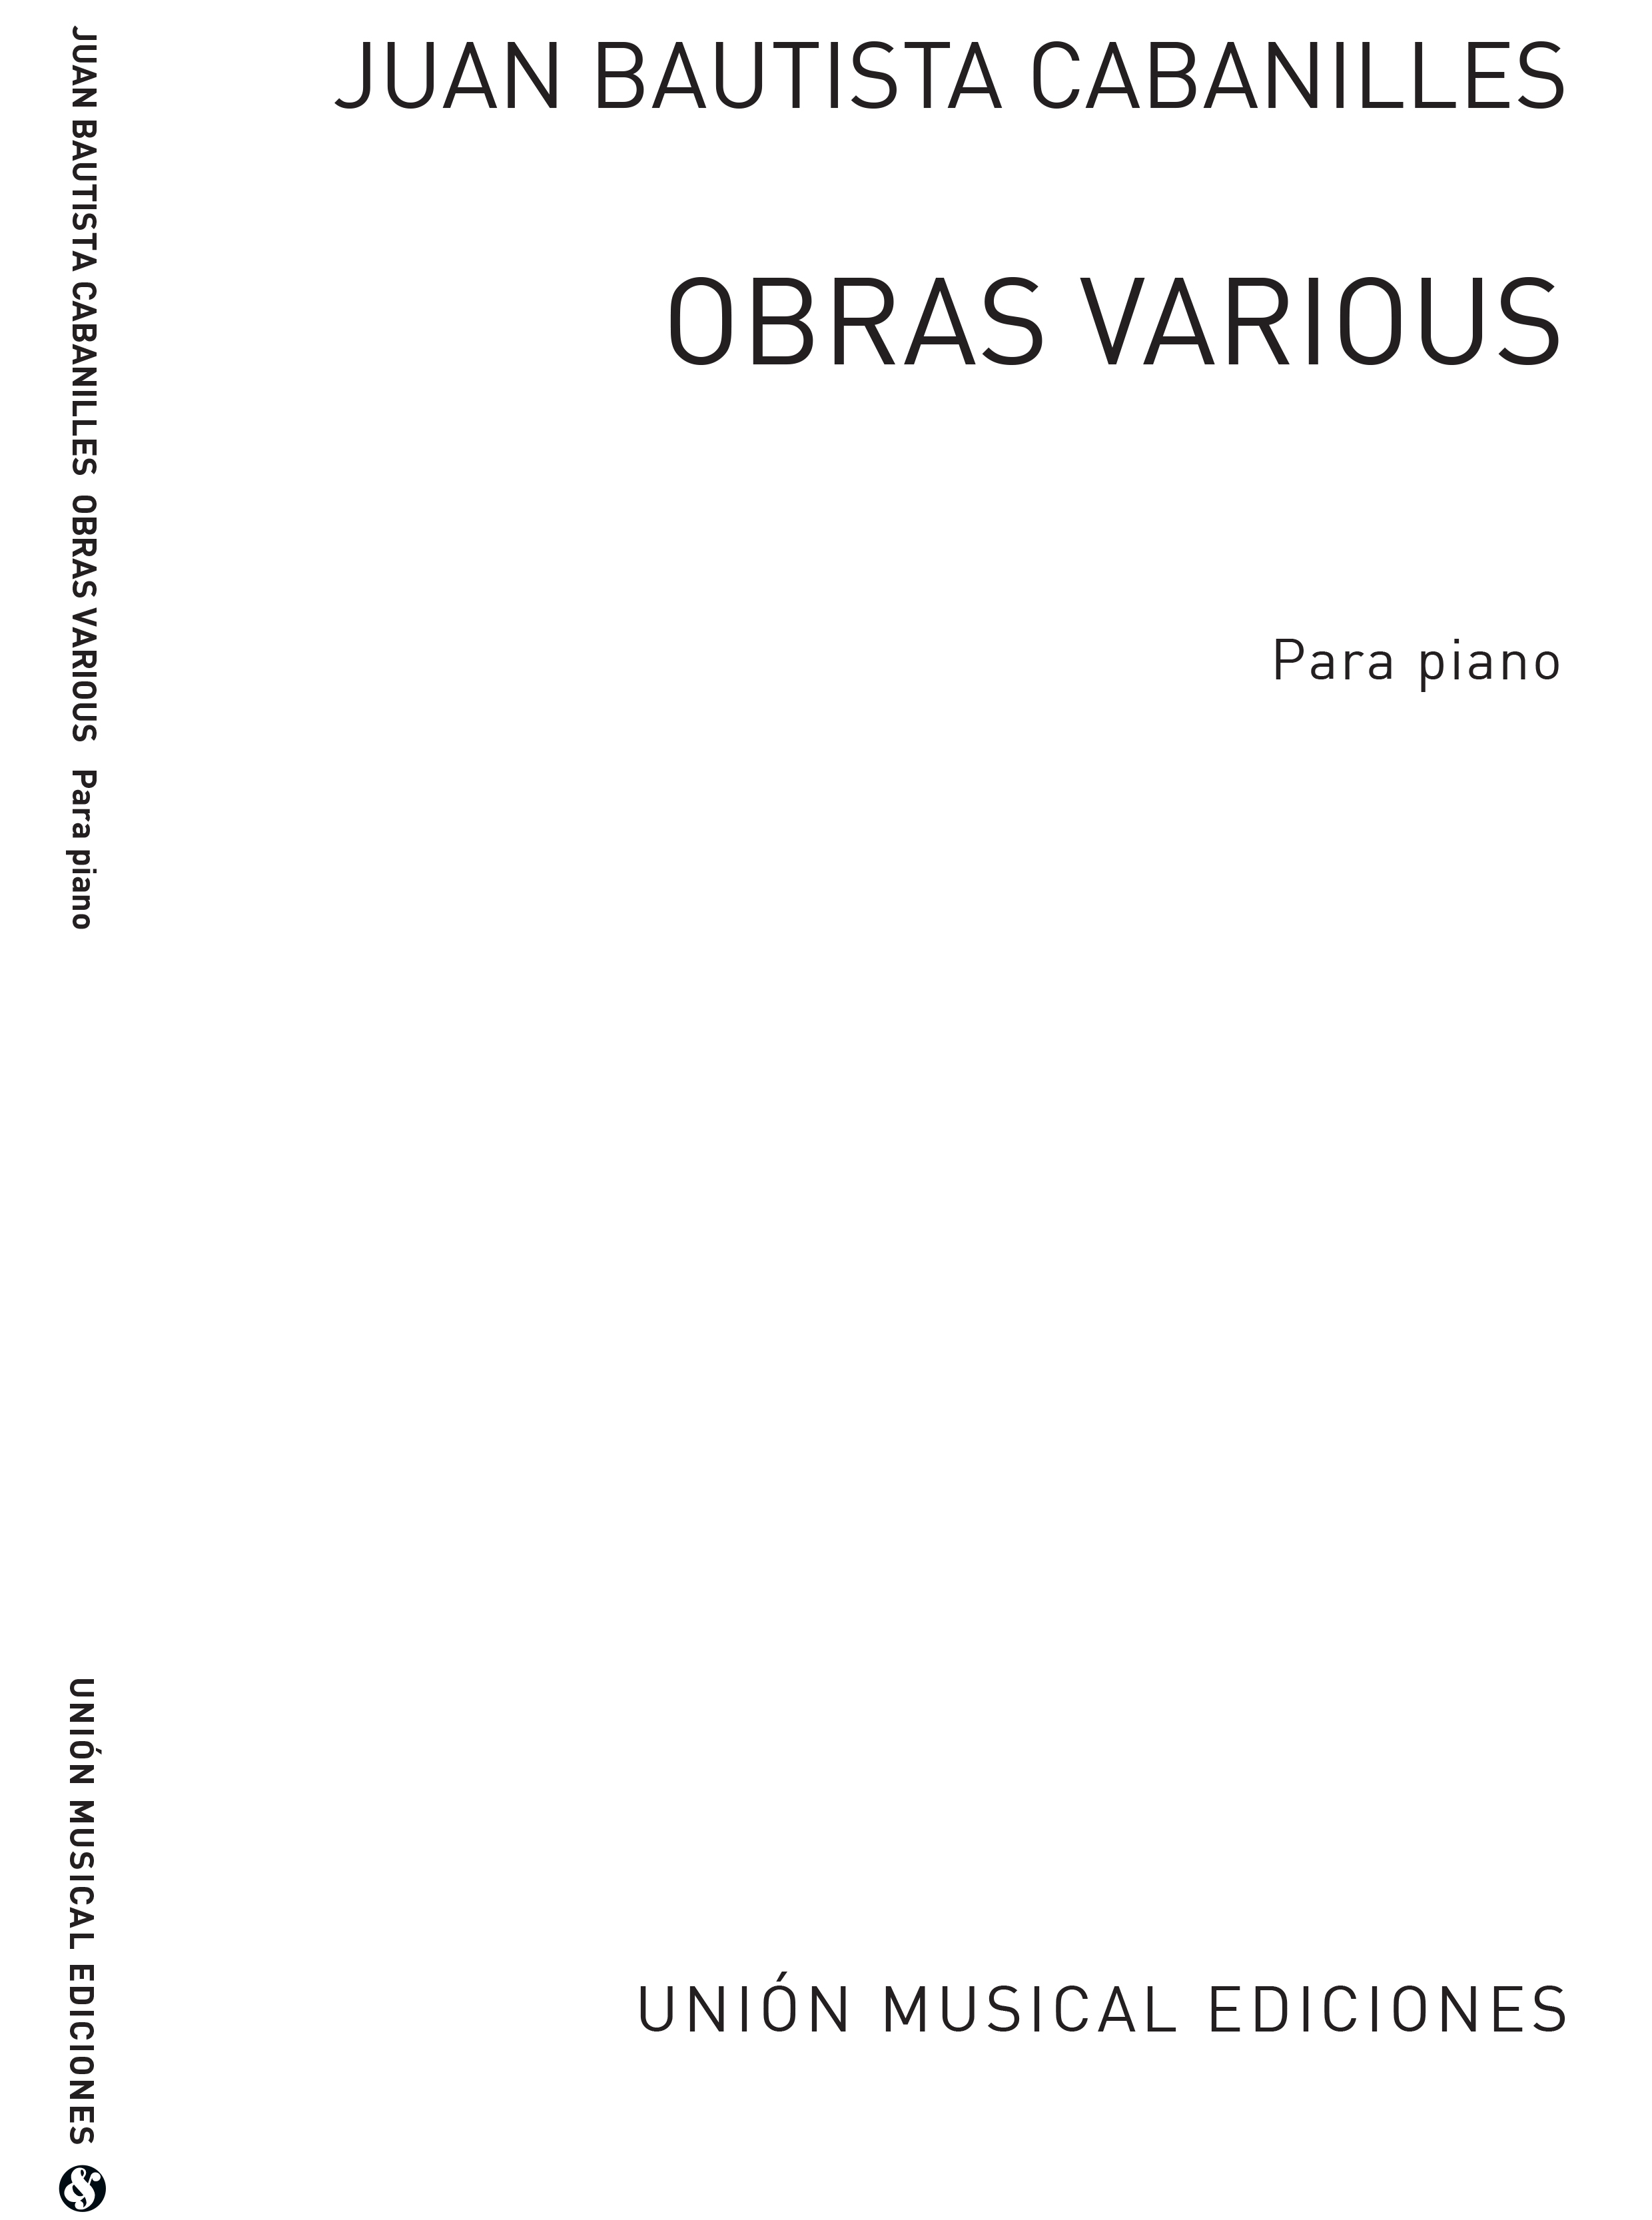 Cabanilles Obras Various: Piano